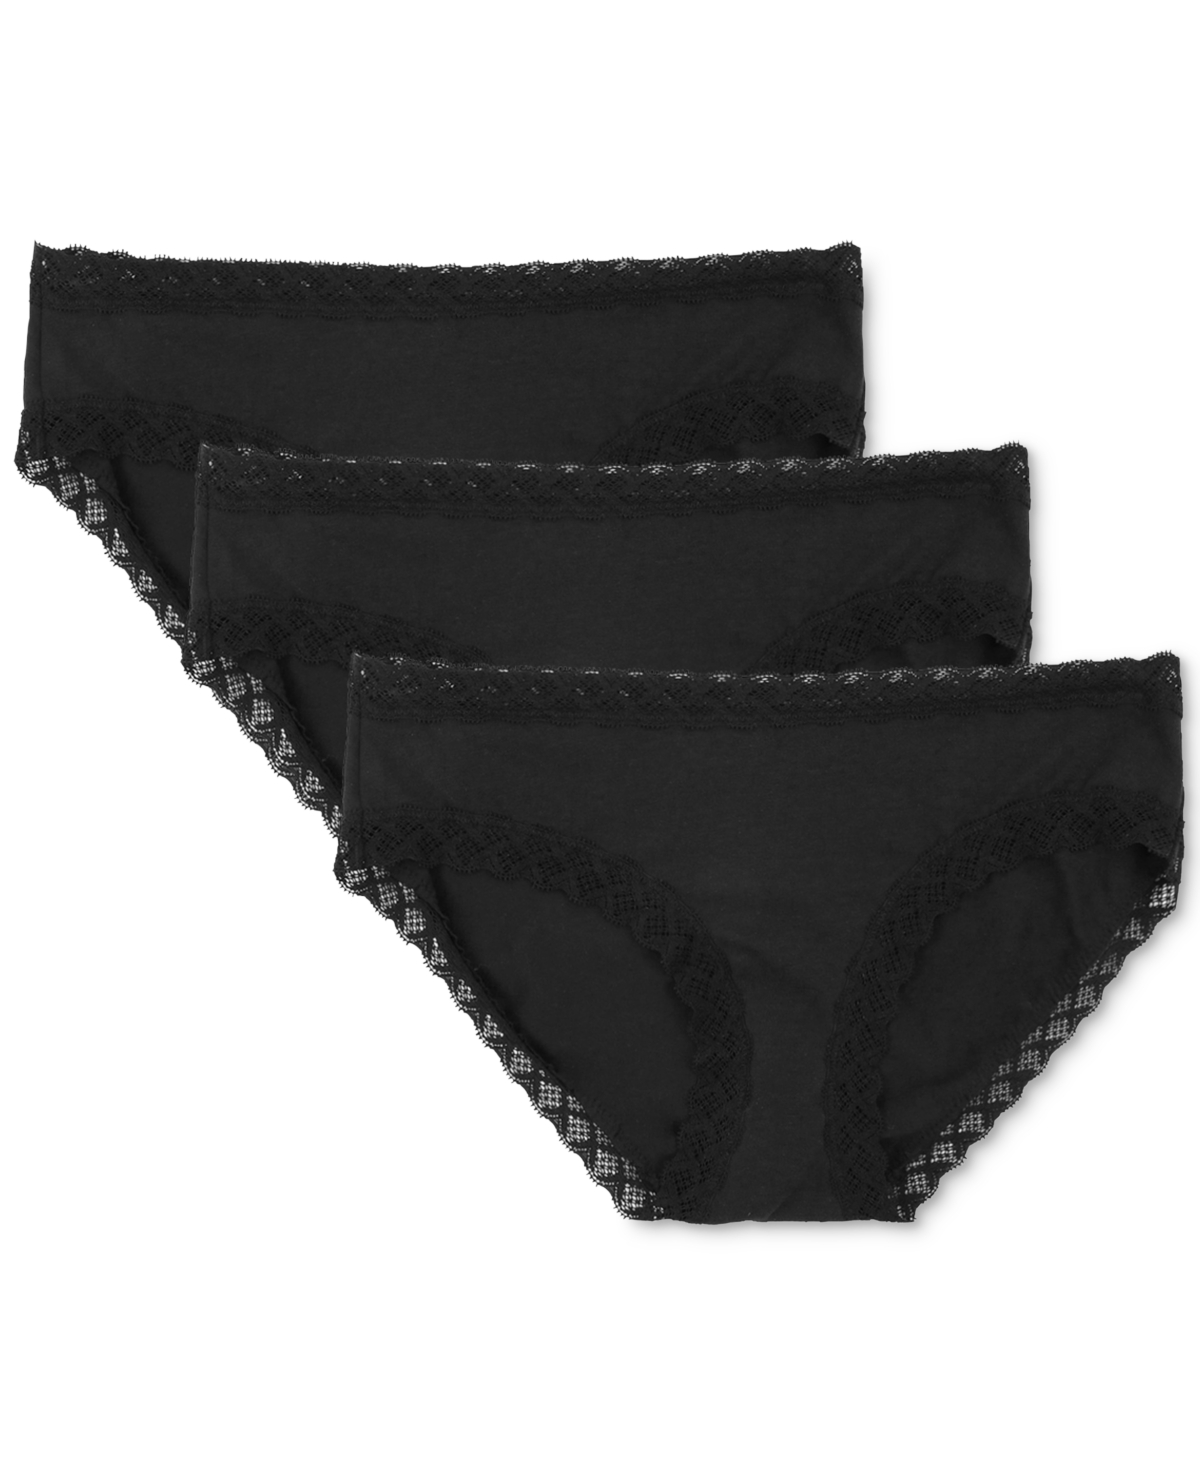 Bliss French Cut Brief Underwear 3-Pack 152058MP - Black/Black/Black